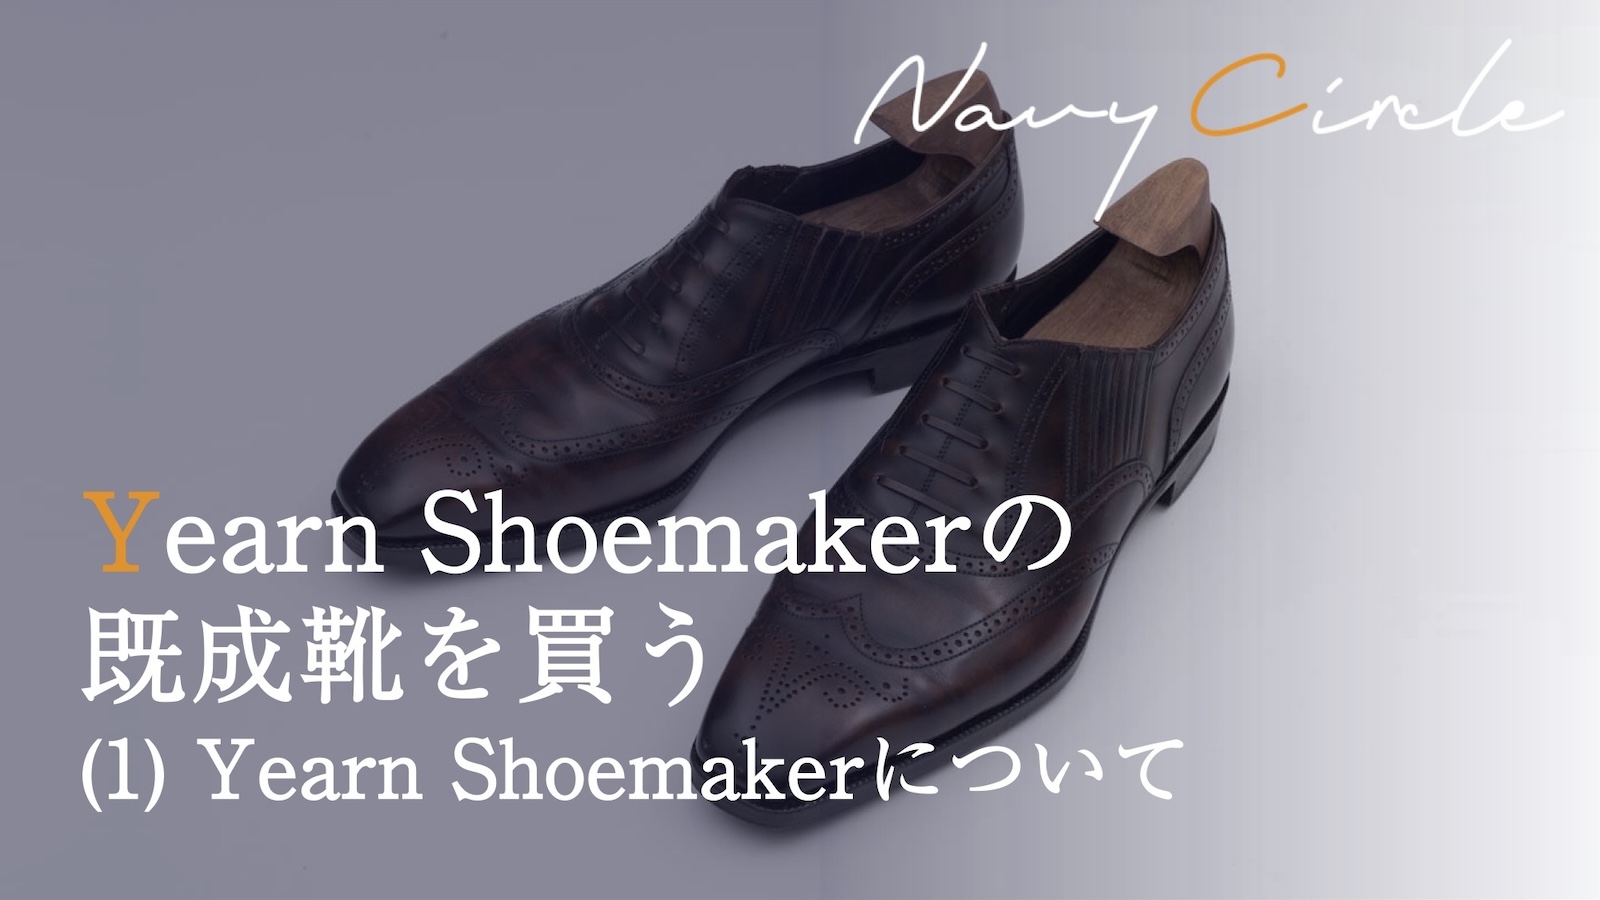 Yearn Shoemakerの既成靴 (RTW) を買う (1) Yearn Shoemakerについて